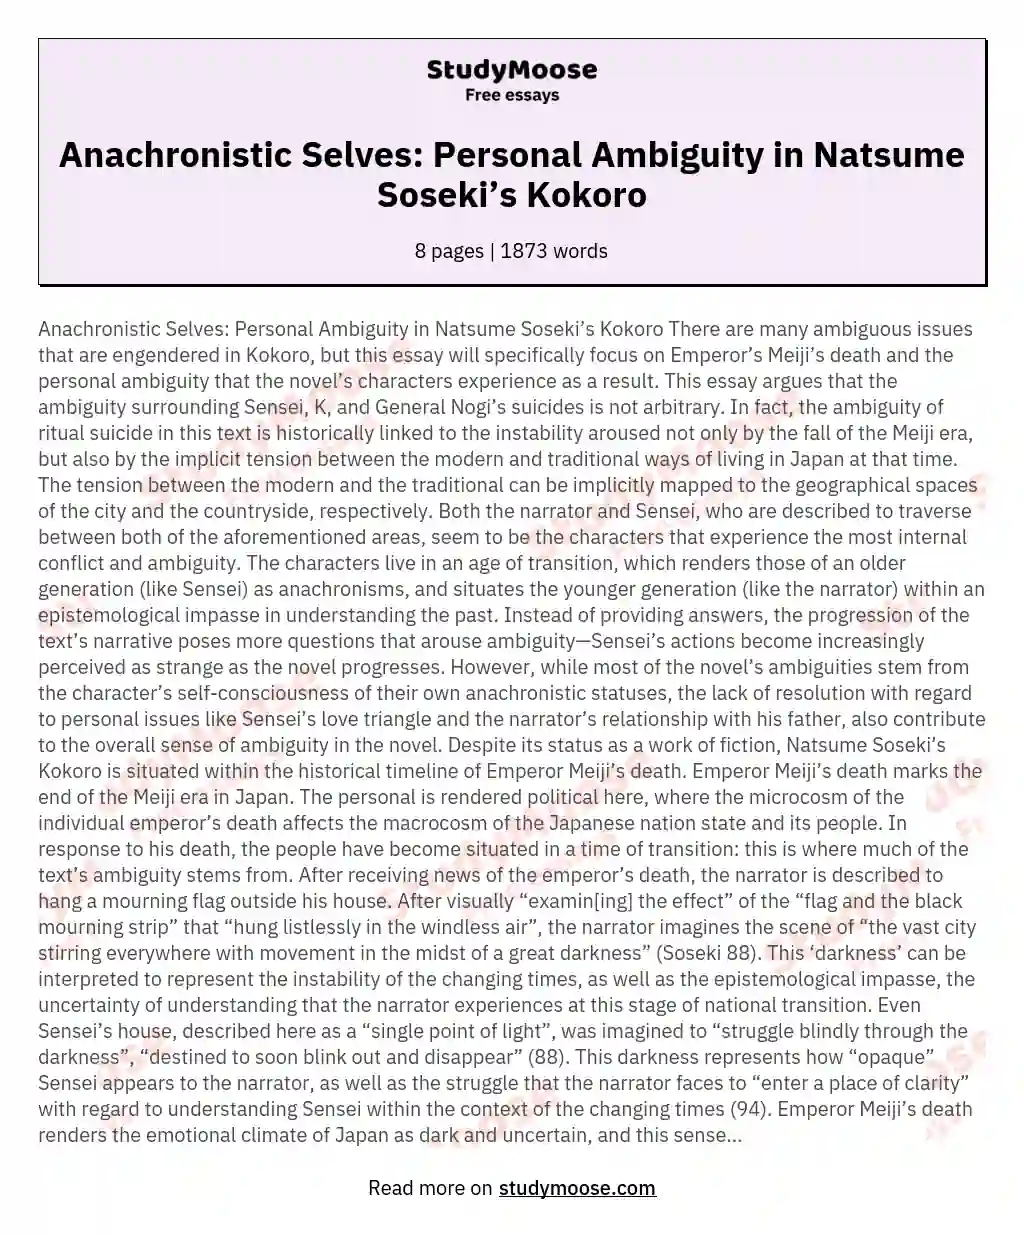 Anachronistic Selves: Personal Ambiguity in Natsume Soseki’s Kokoro essay